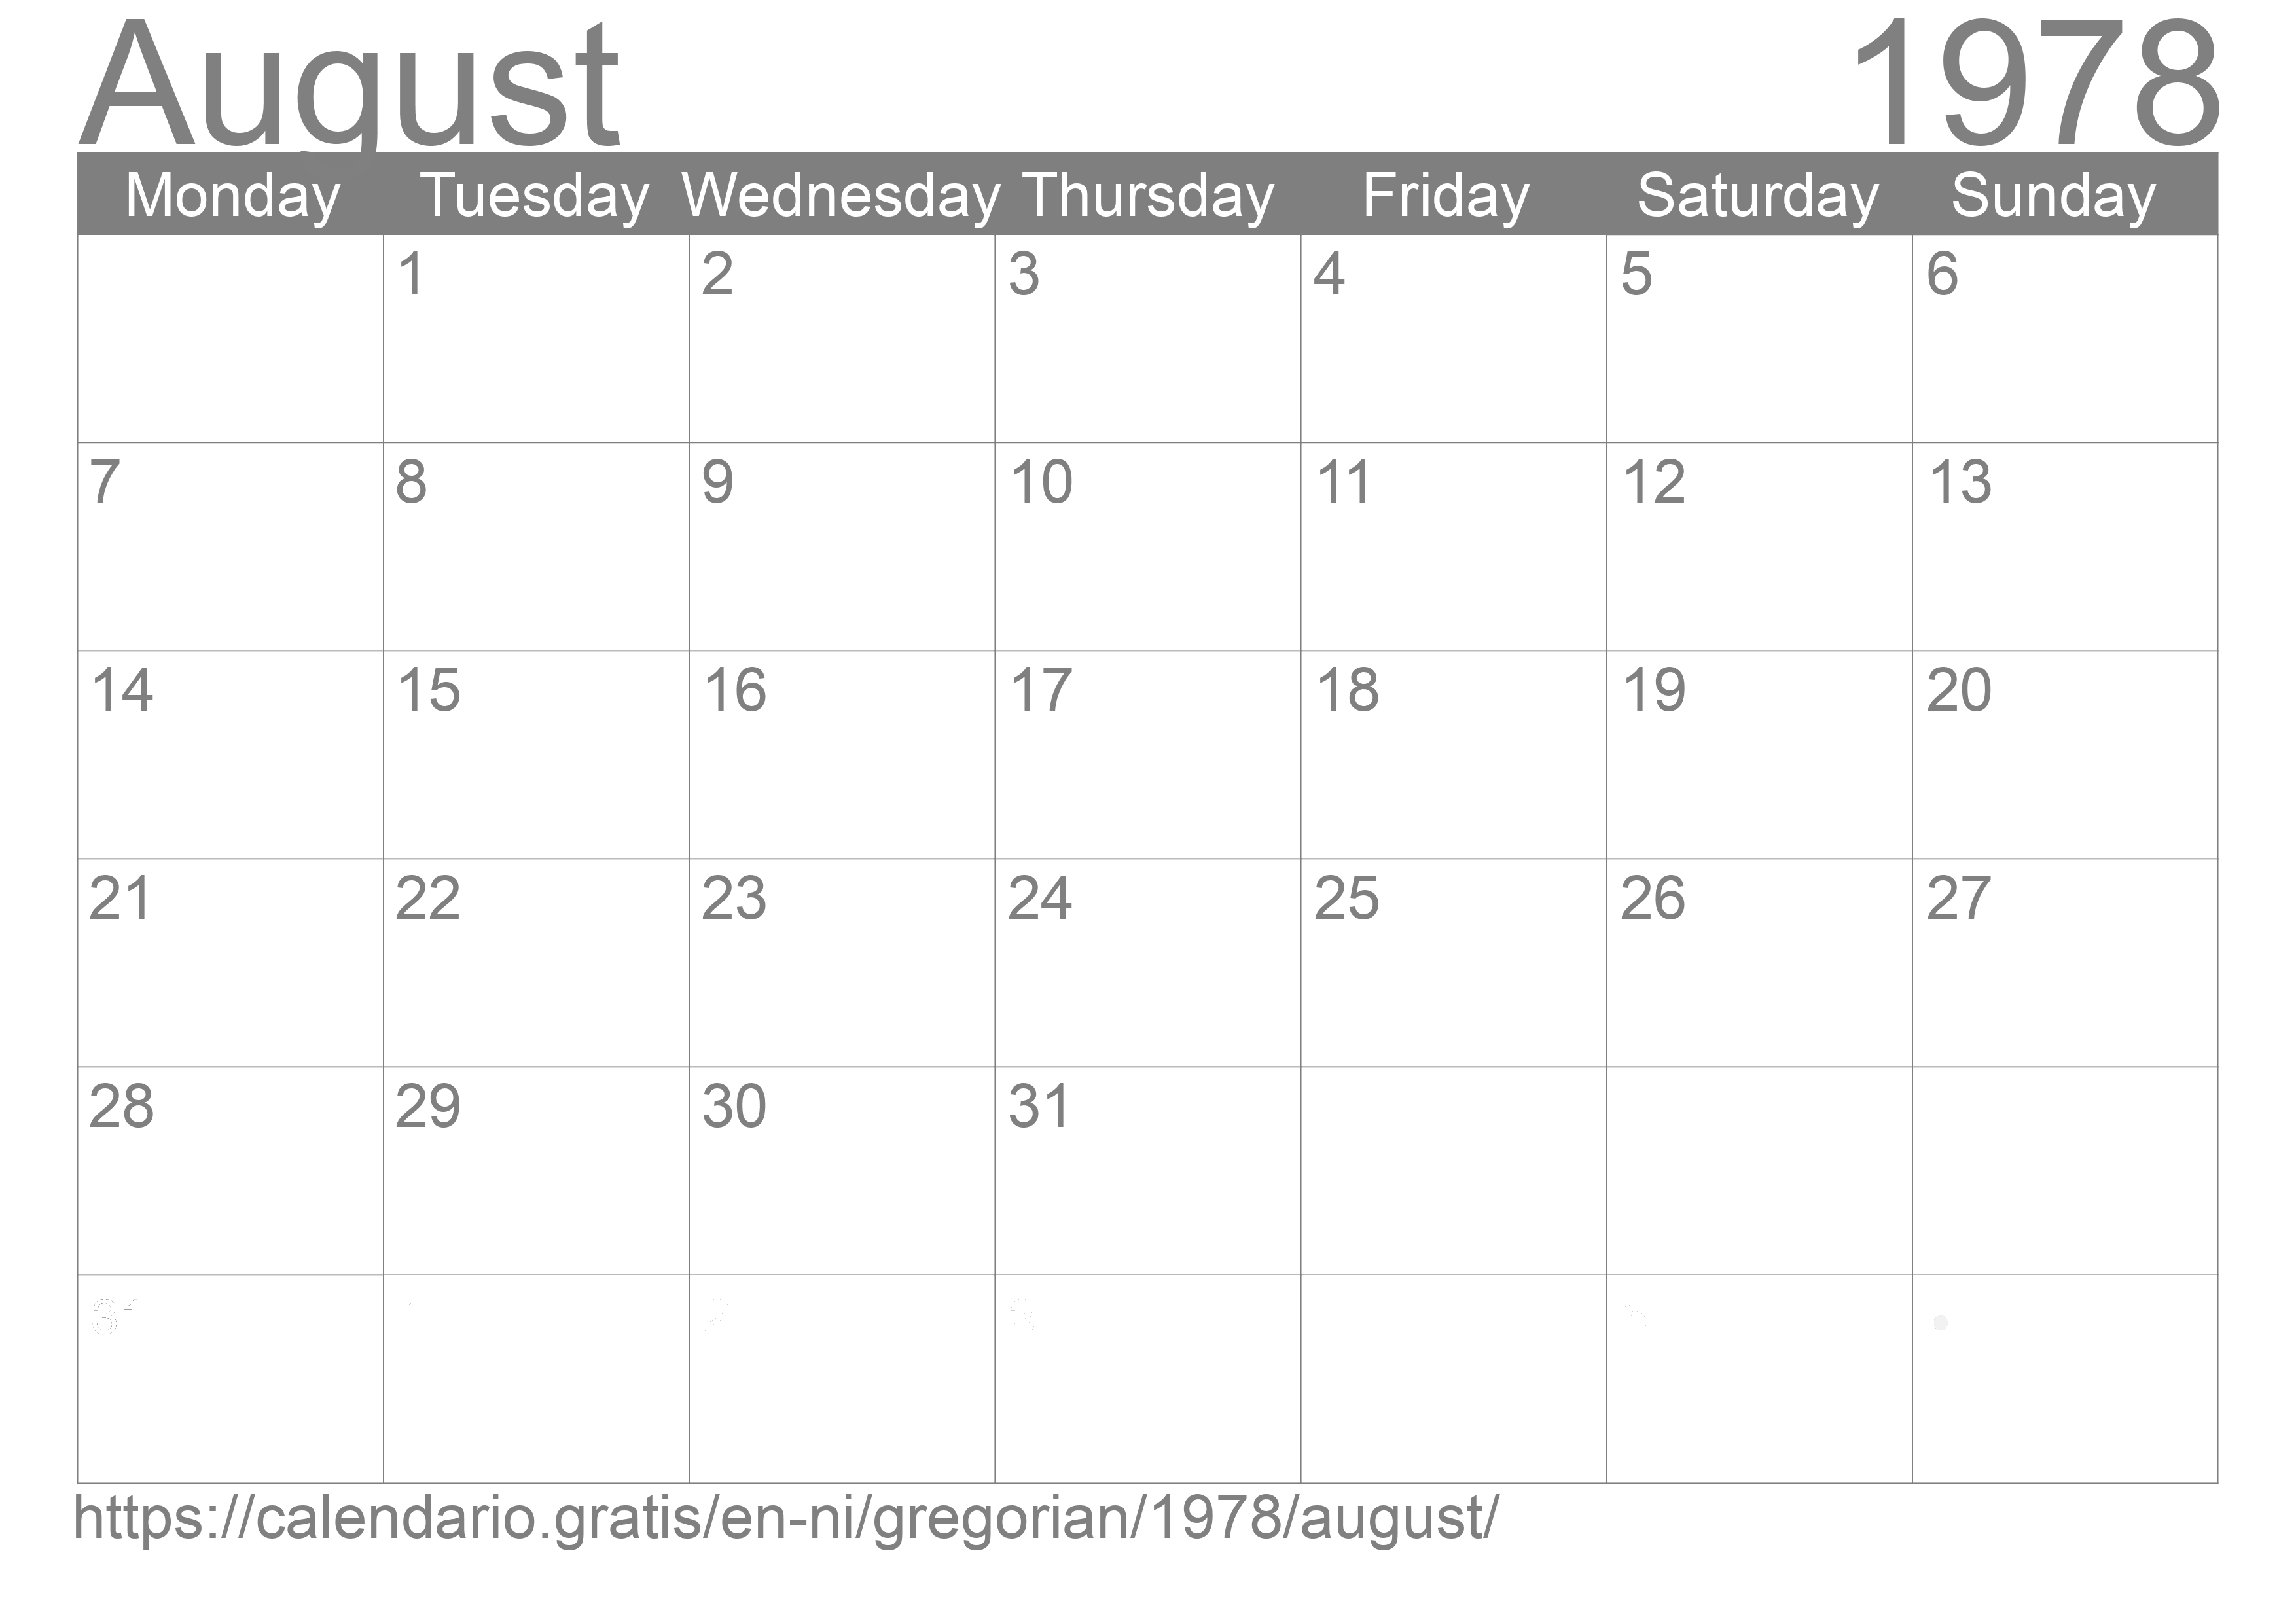 Calendar August 1978 to print